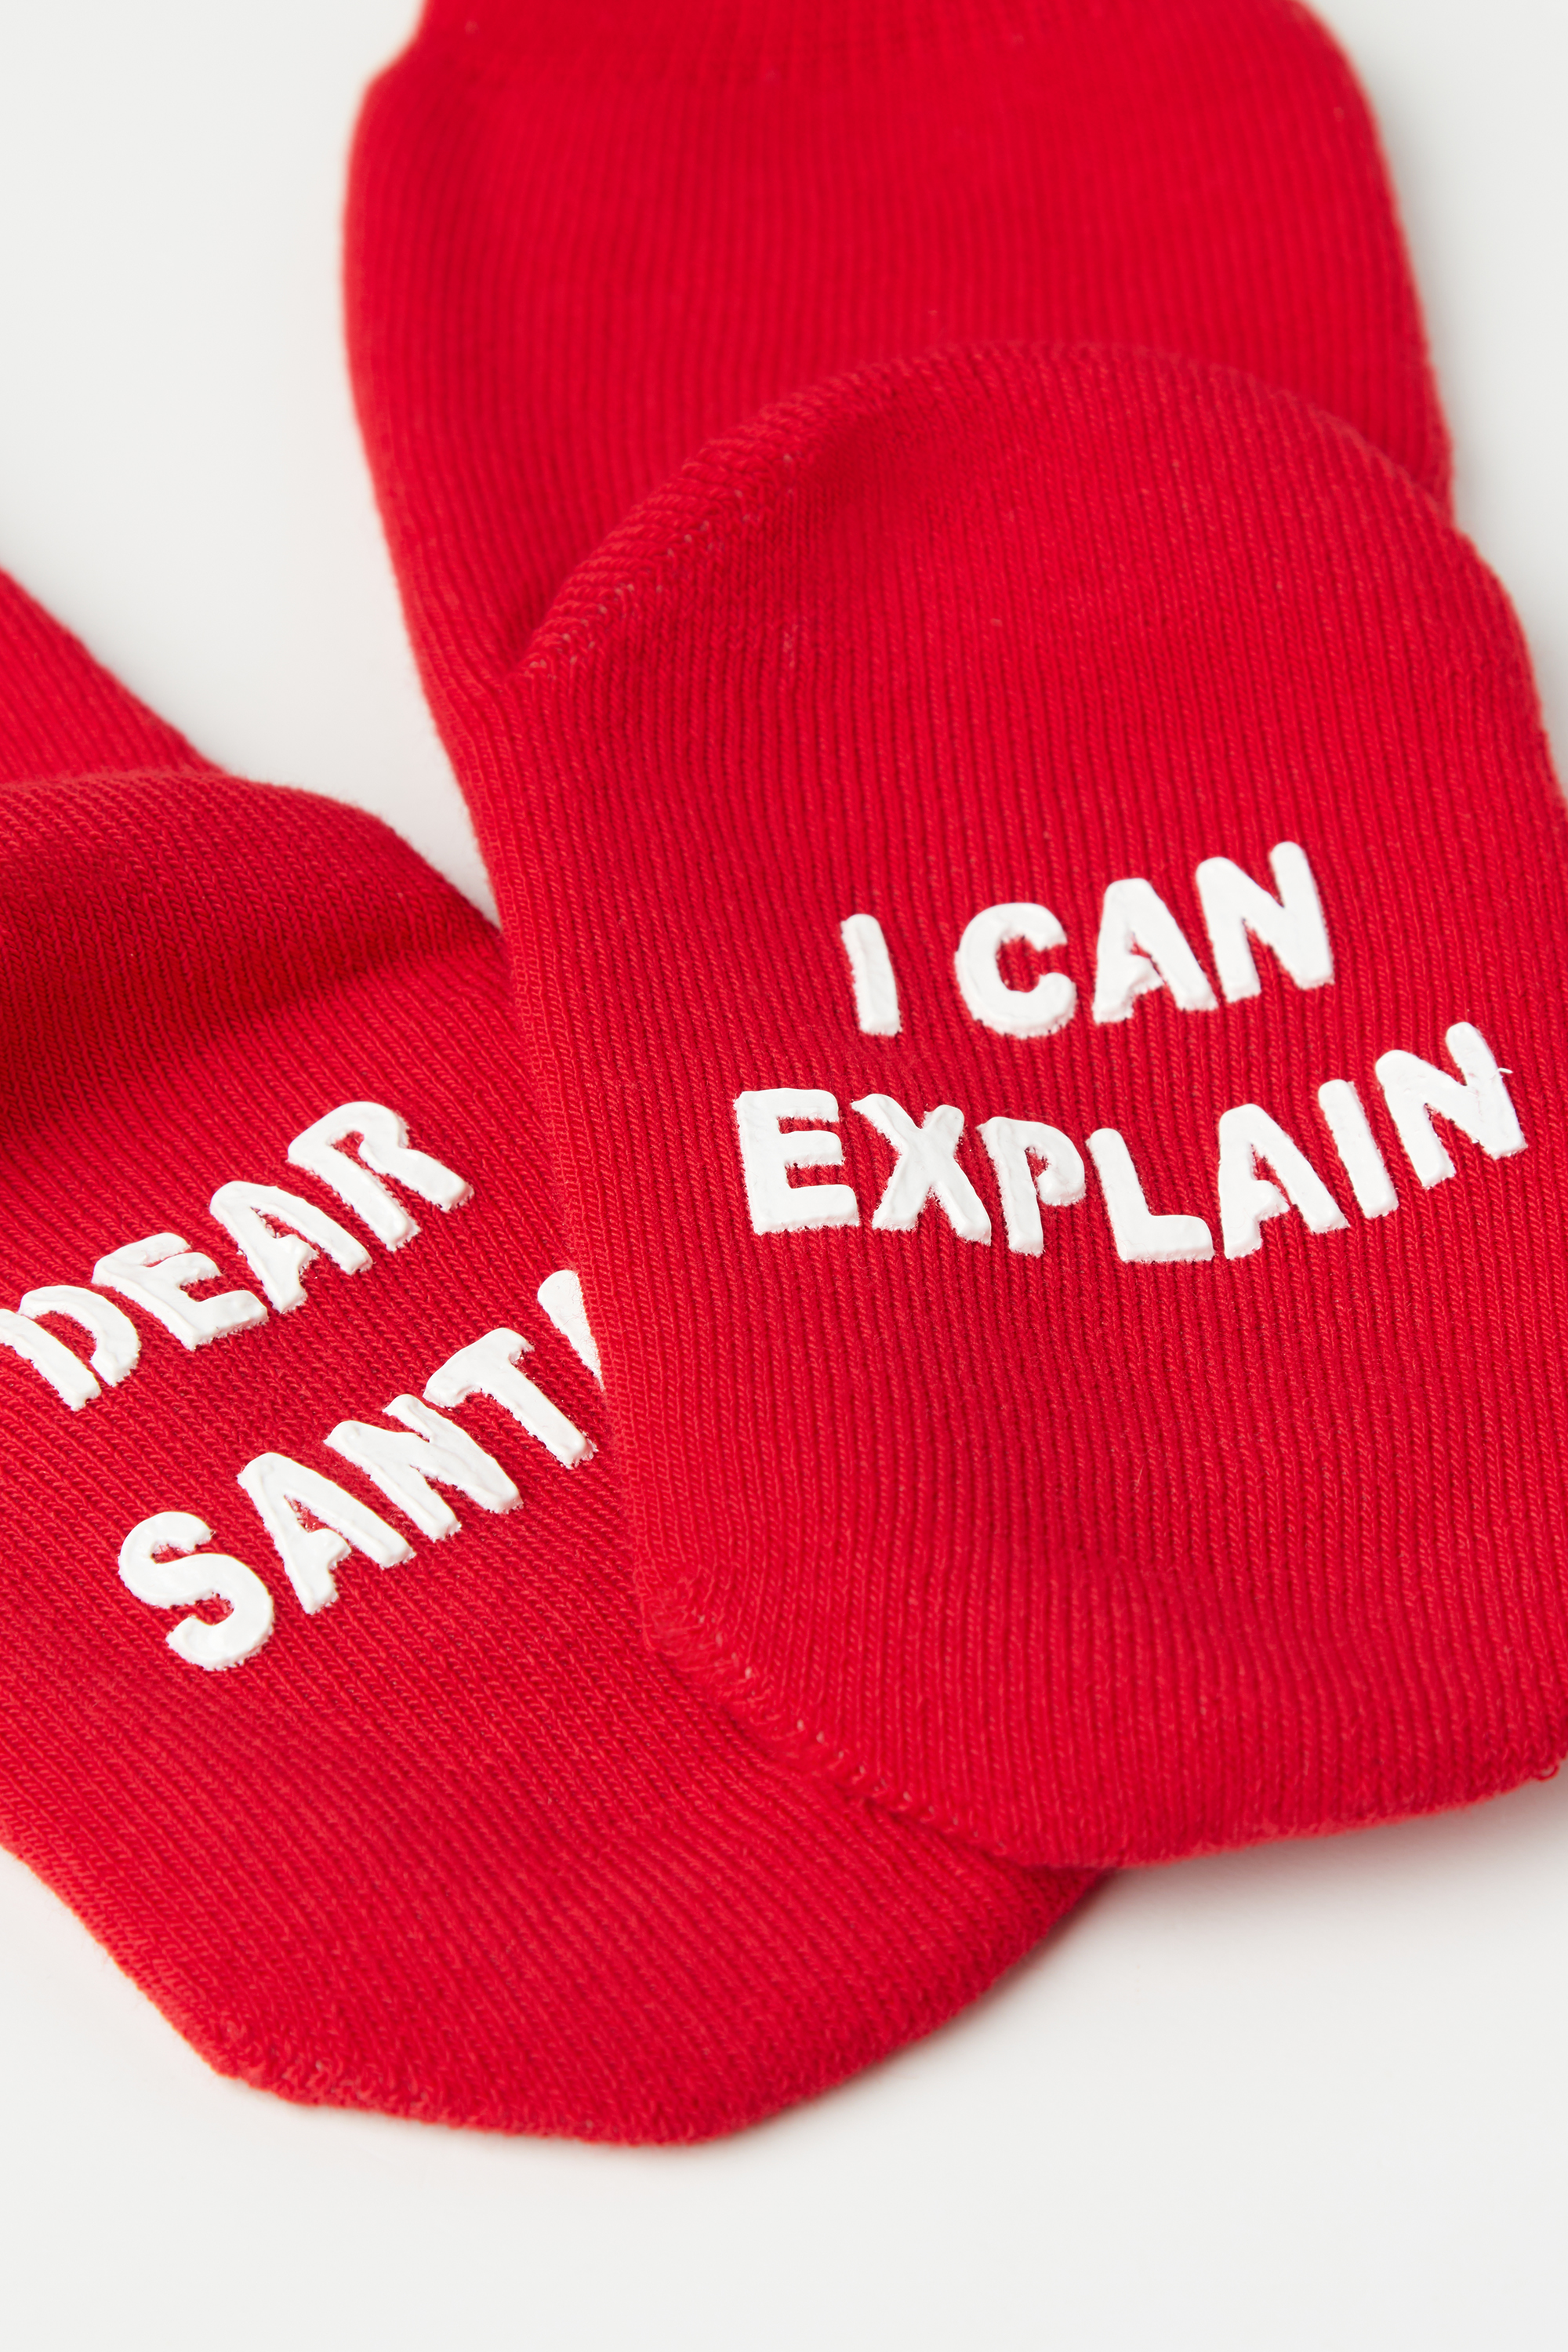 Kids' Unisex Short Non-Slip Socks with "Dear Santa" Christmas Print